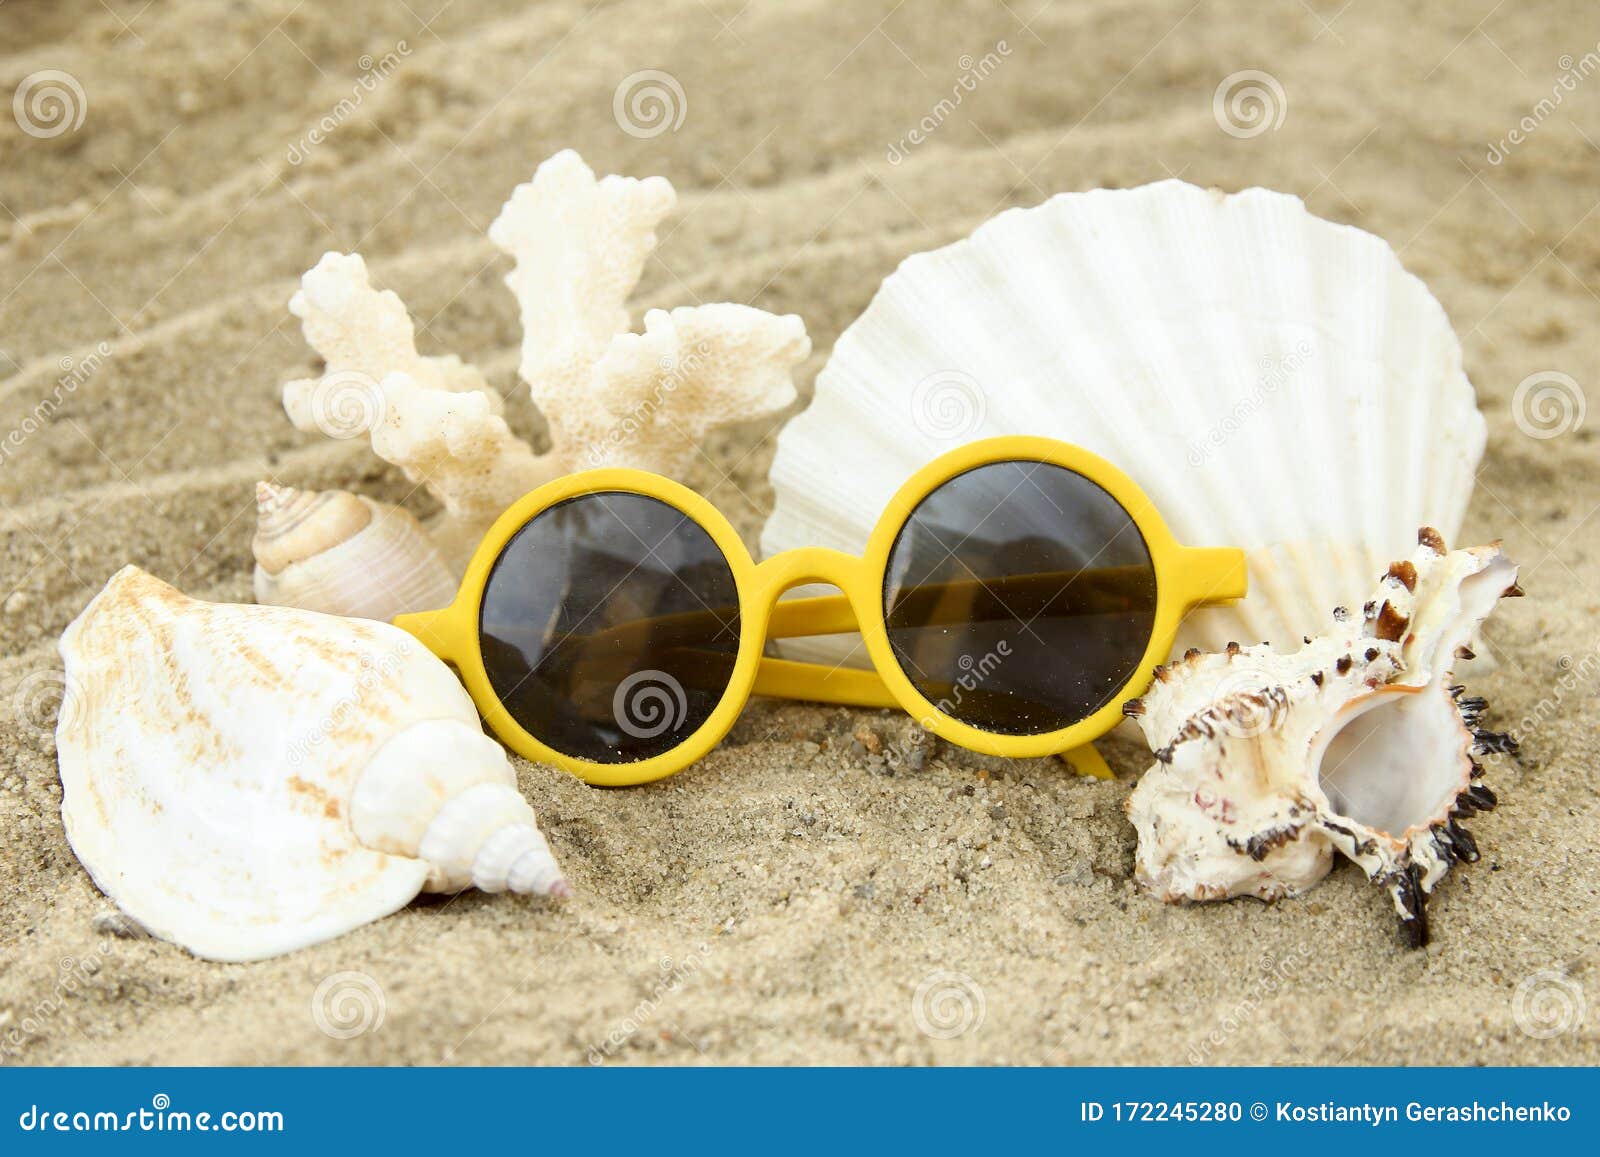 Seashells on Sand Background Stock Photo - Image of seashells, beach ...